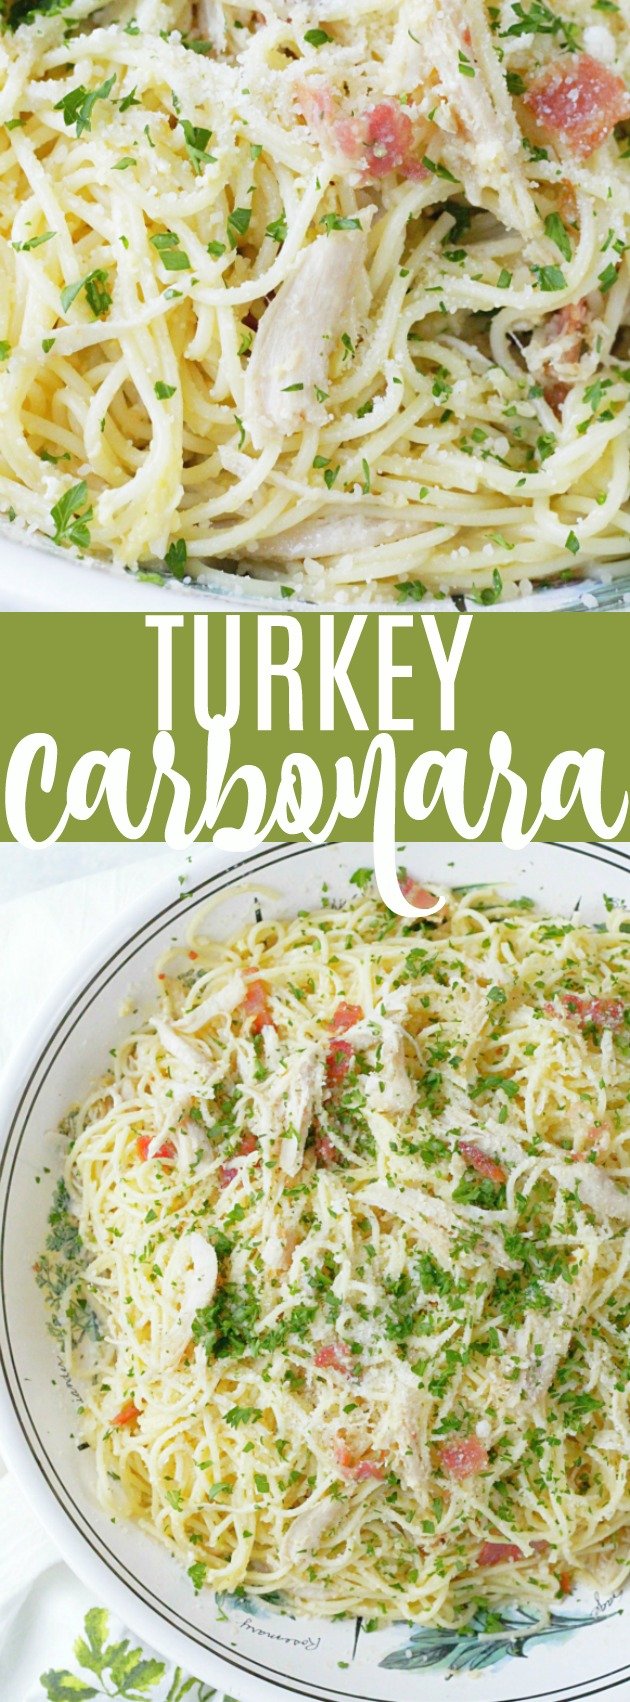 Turkey Carbonara - use up that leftover Thanksgiving turkey! #ohioeggs #ad #thanksgivingleftovers #turkeyrecipes #turkeycarbonara #pastarecipes via @foodtasticmom